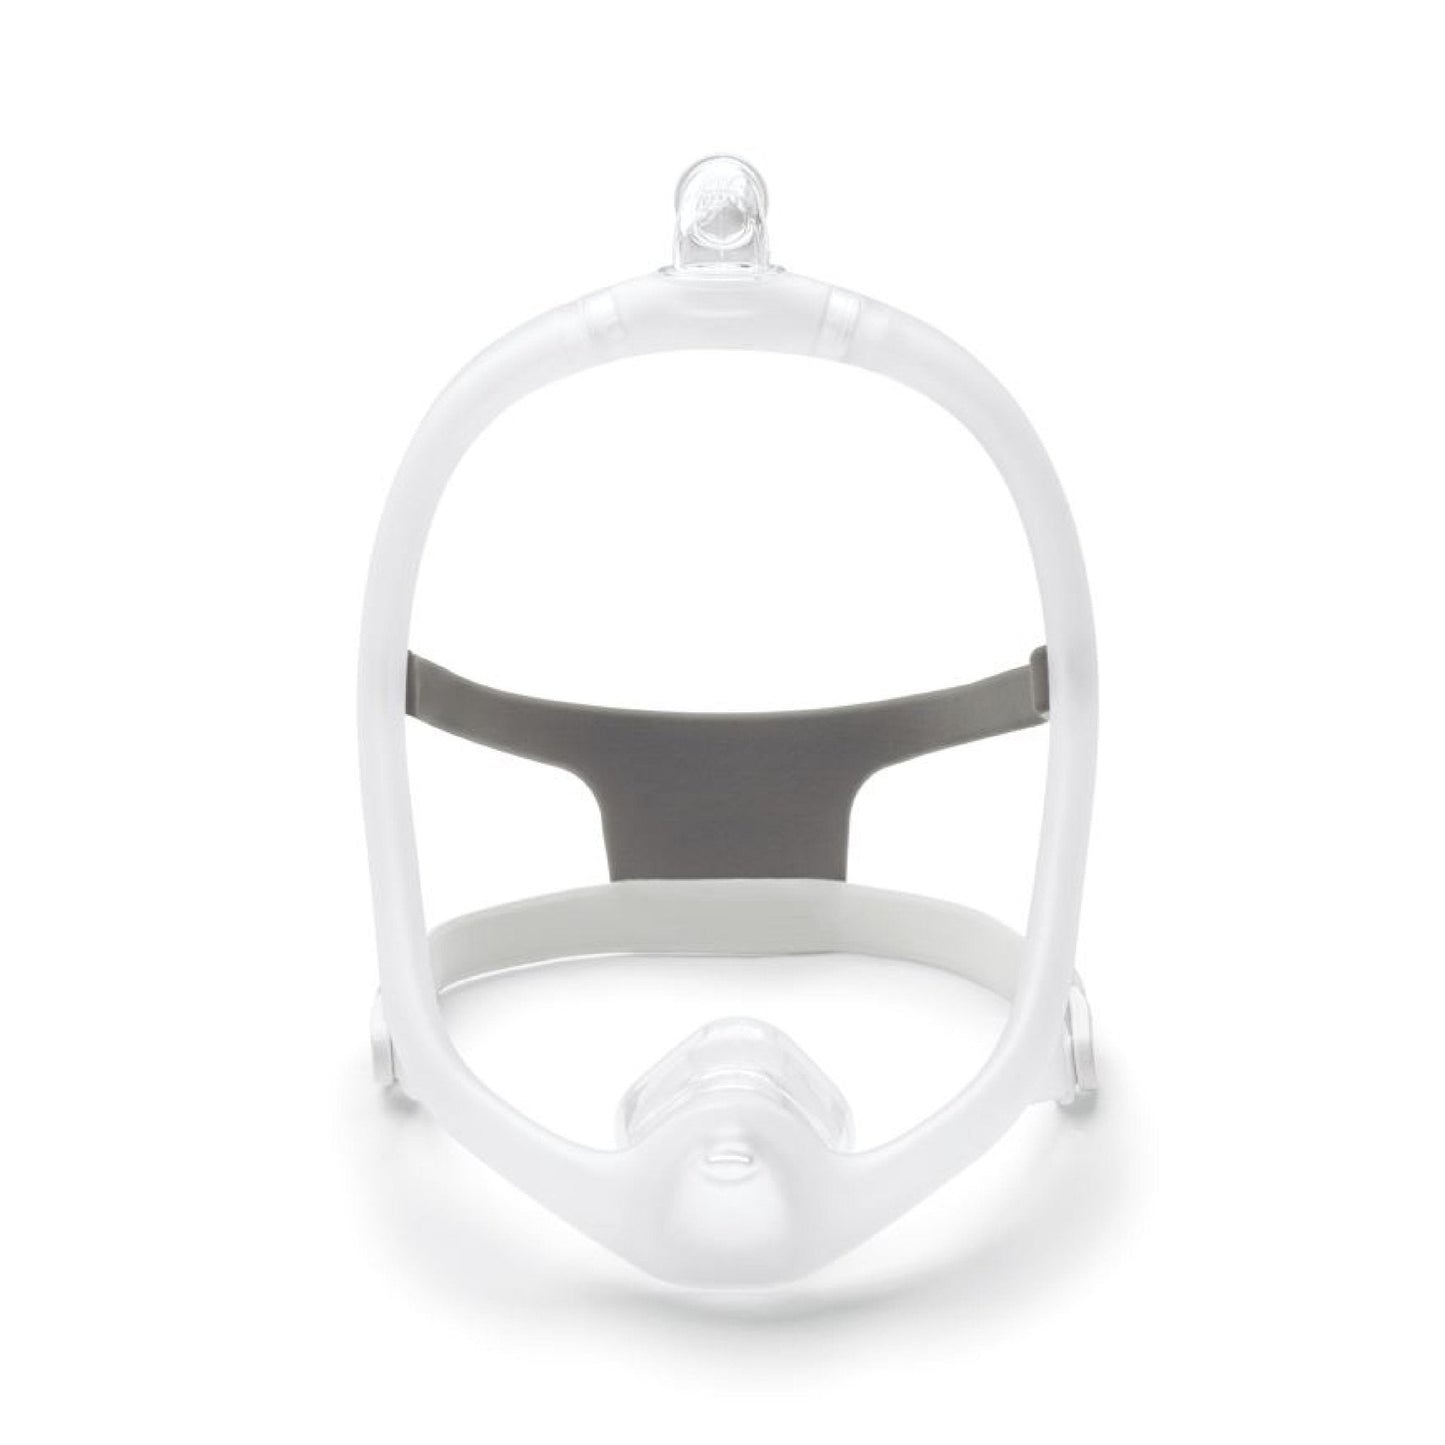 Philips Respironics DreamWisp Nasal CPAP Mask - resplabs